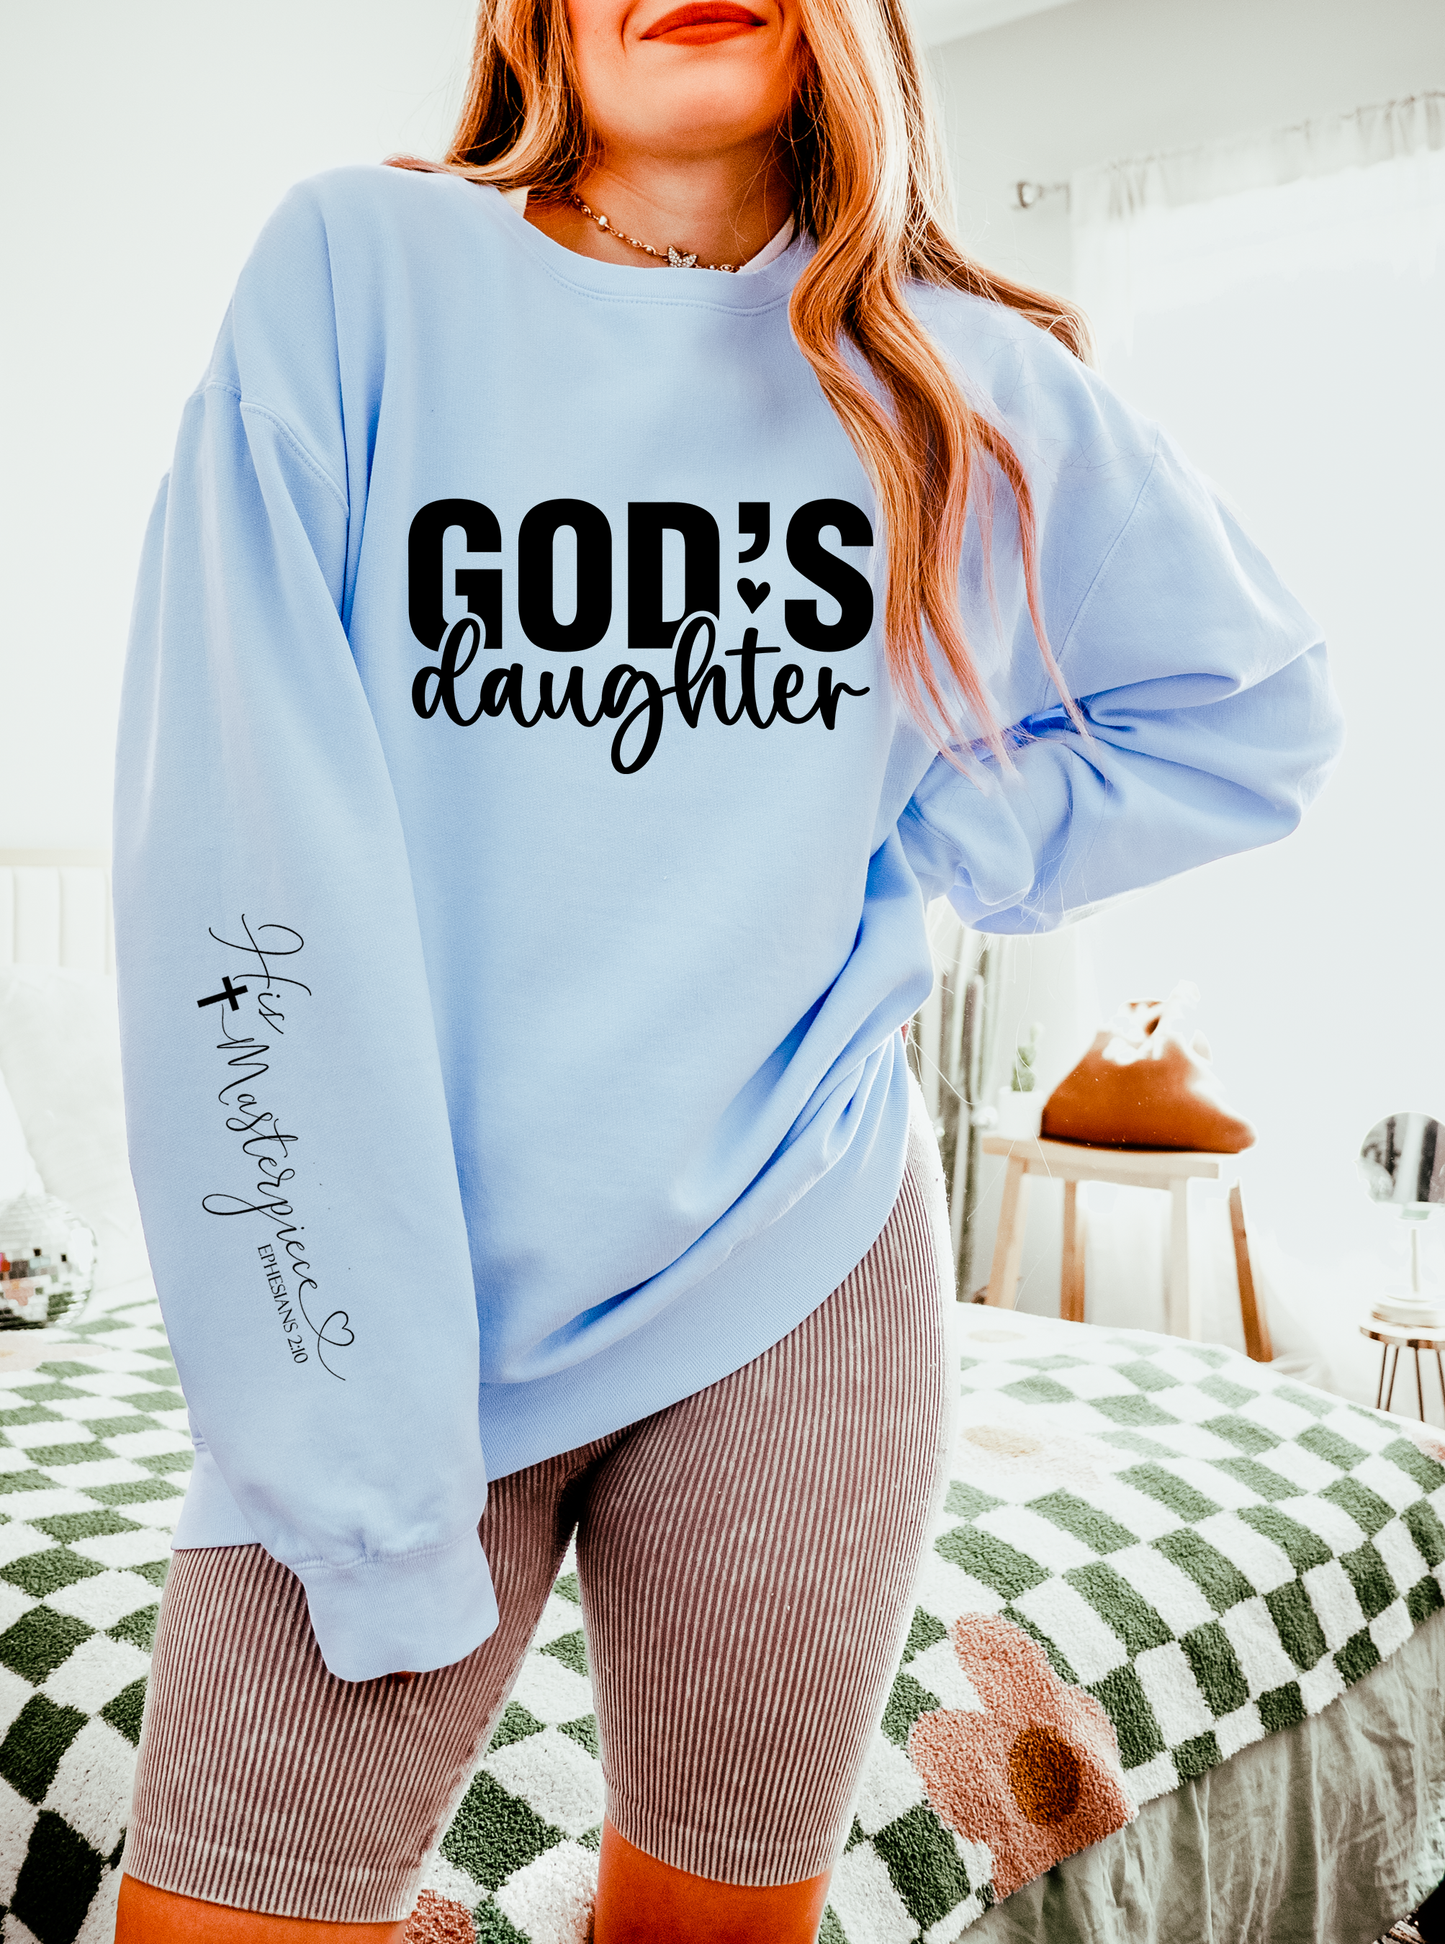 God's Daughter, His Masterpiece Christian Bible Verse Scriptures Unisex Lightweight Crewneck Sweatshirt